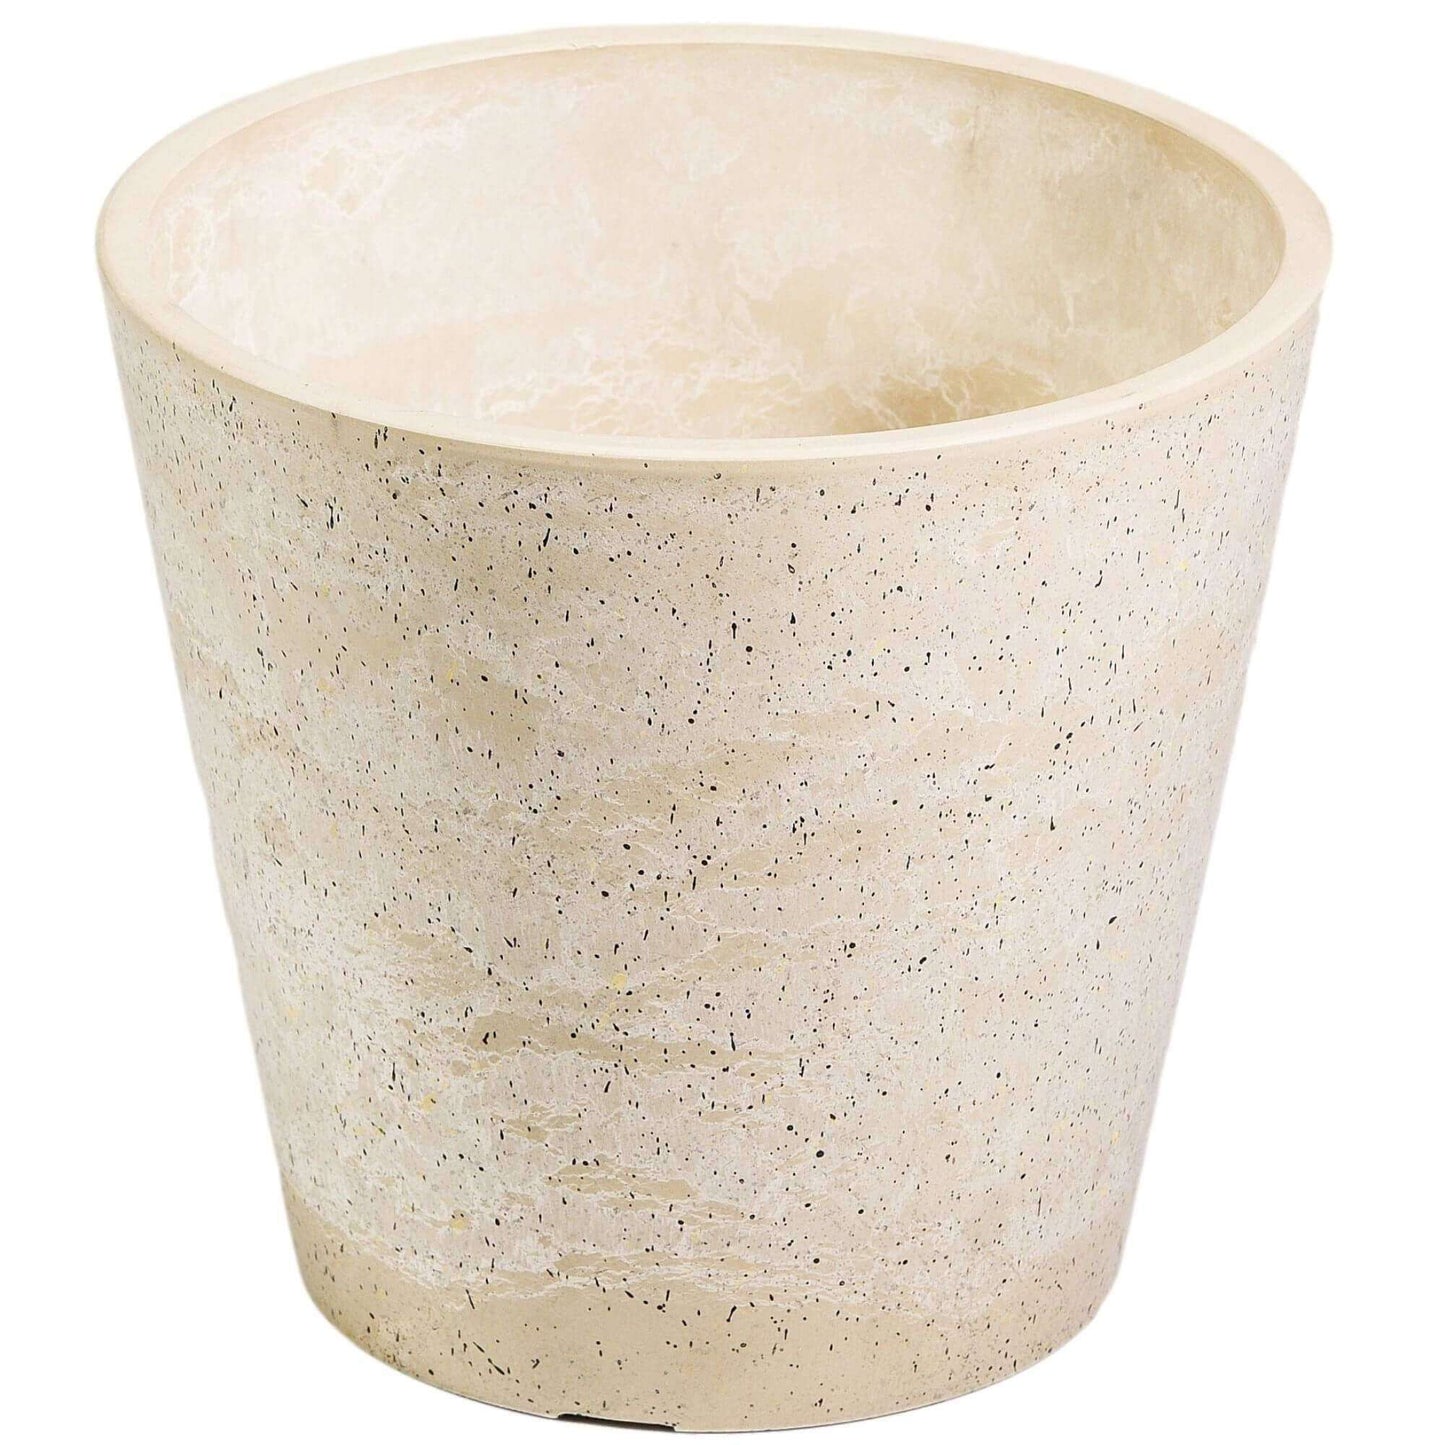 Imitation Stone Garden Pot (White / Cream) (20cm)